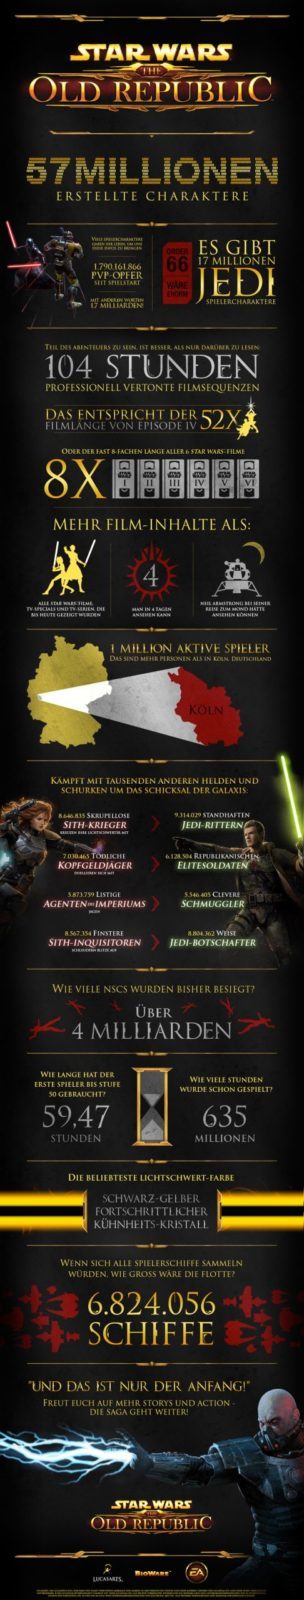 Star Wars: The Old Republic – 1 Million aktive Spieler